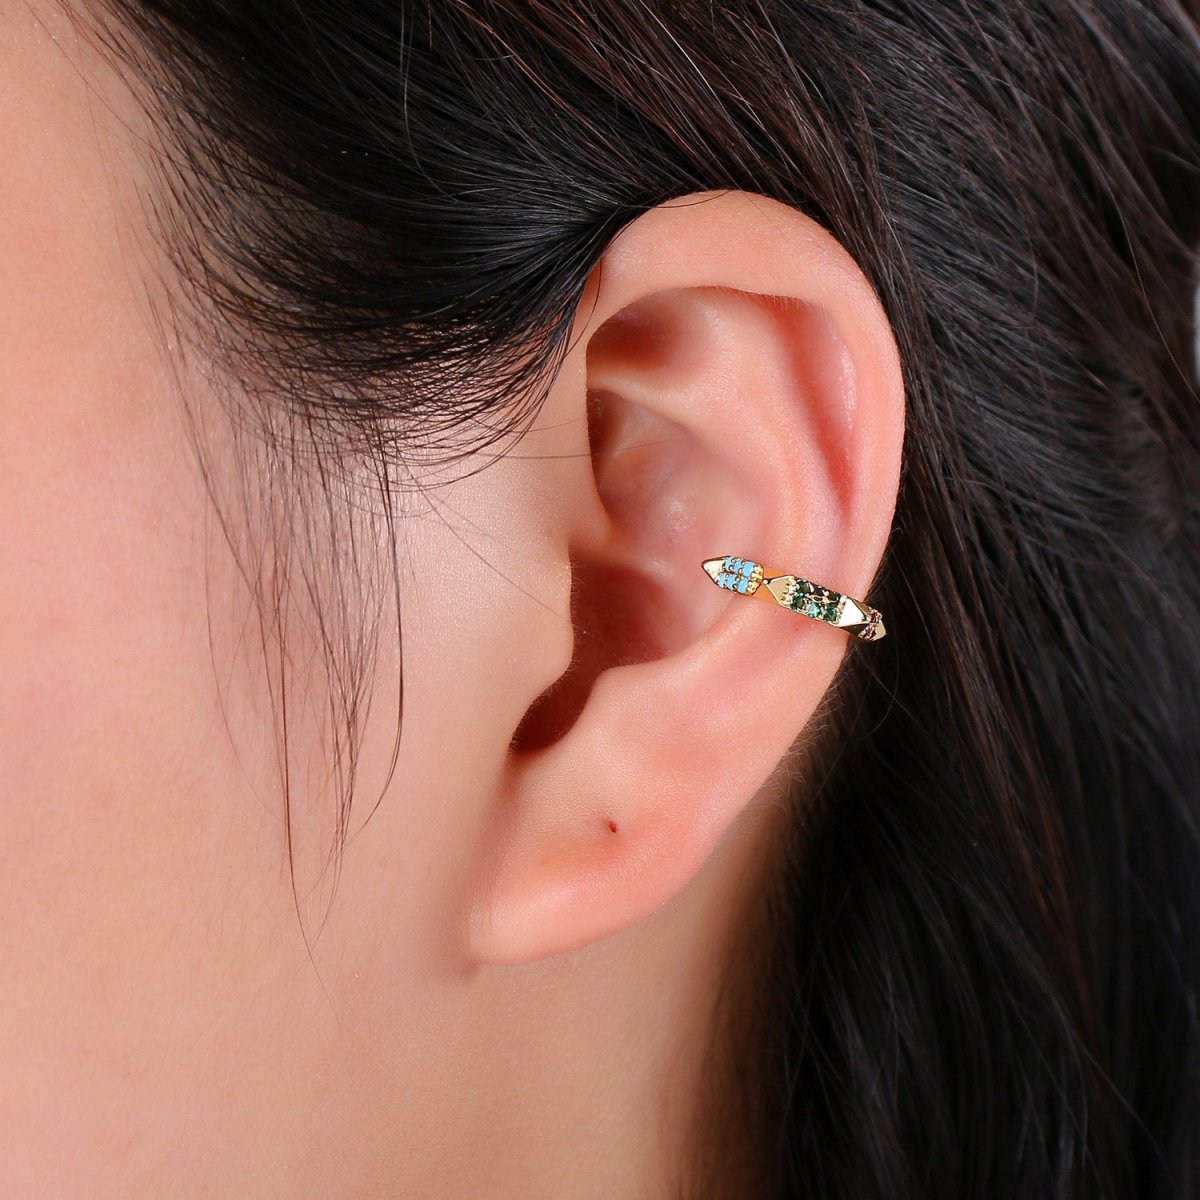 1x Dainty Pyramid Spikes Conch Ear Cuff Earrings Studded Gold Spike Earcuff Earring AI-104 - DLUXCA